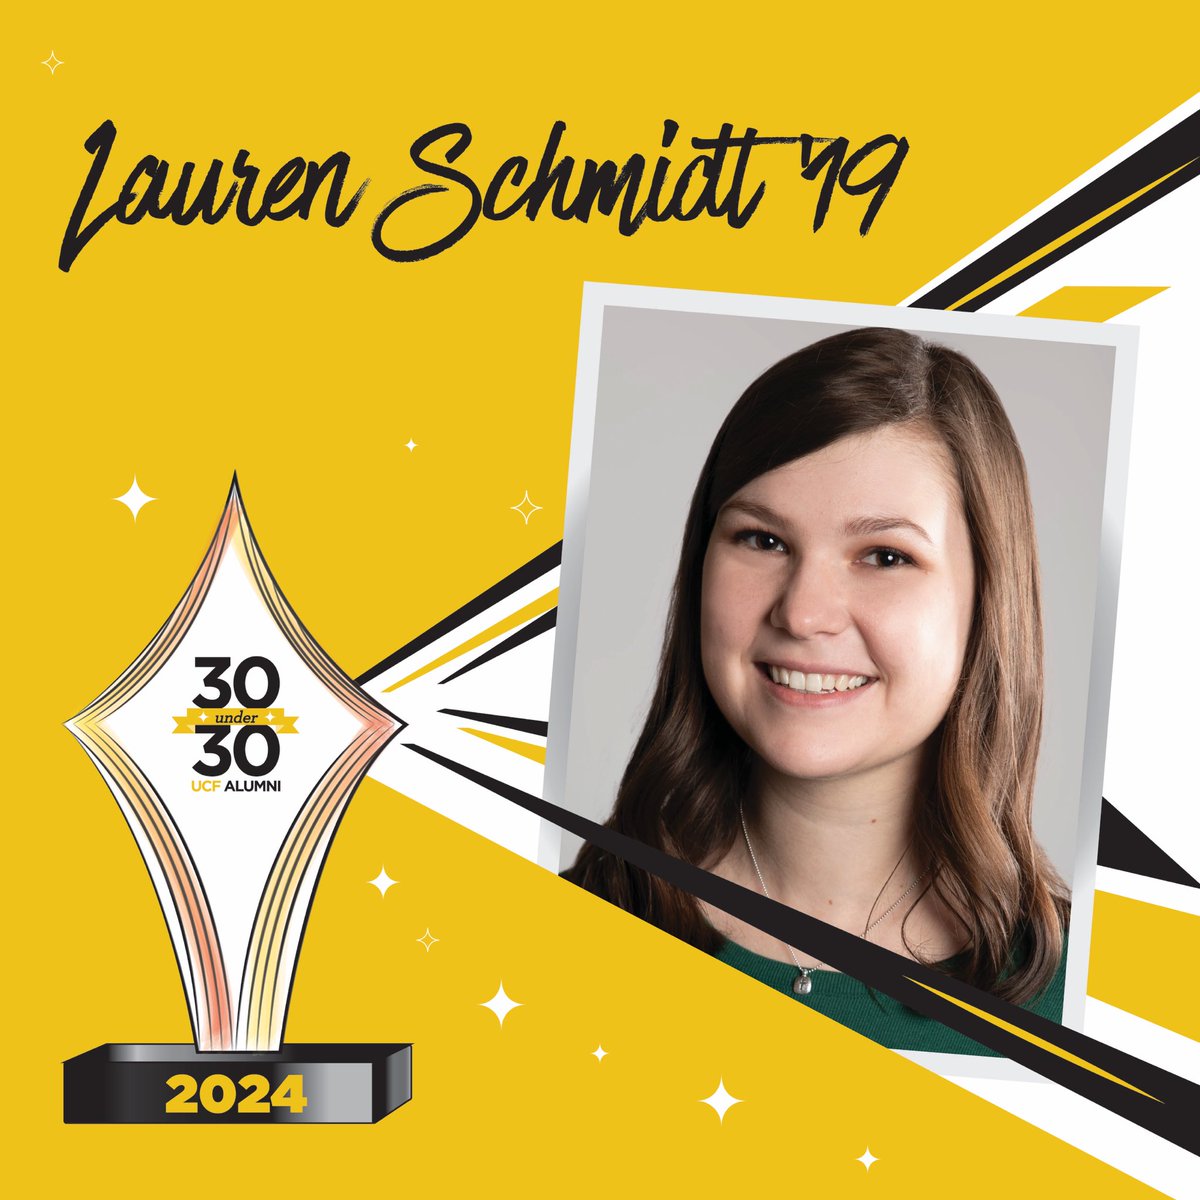 Congrats to environmental engineering alum Lauren Schmidt ‘19 for being named to UCF’s 30 Under 30 list!